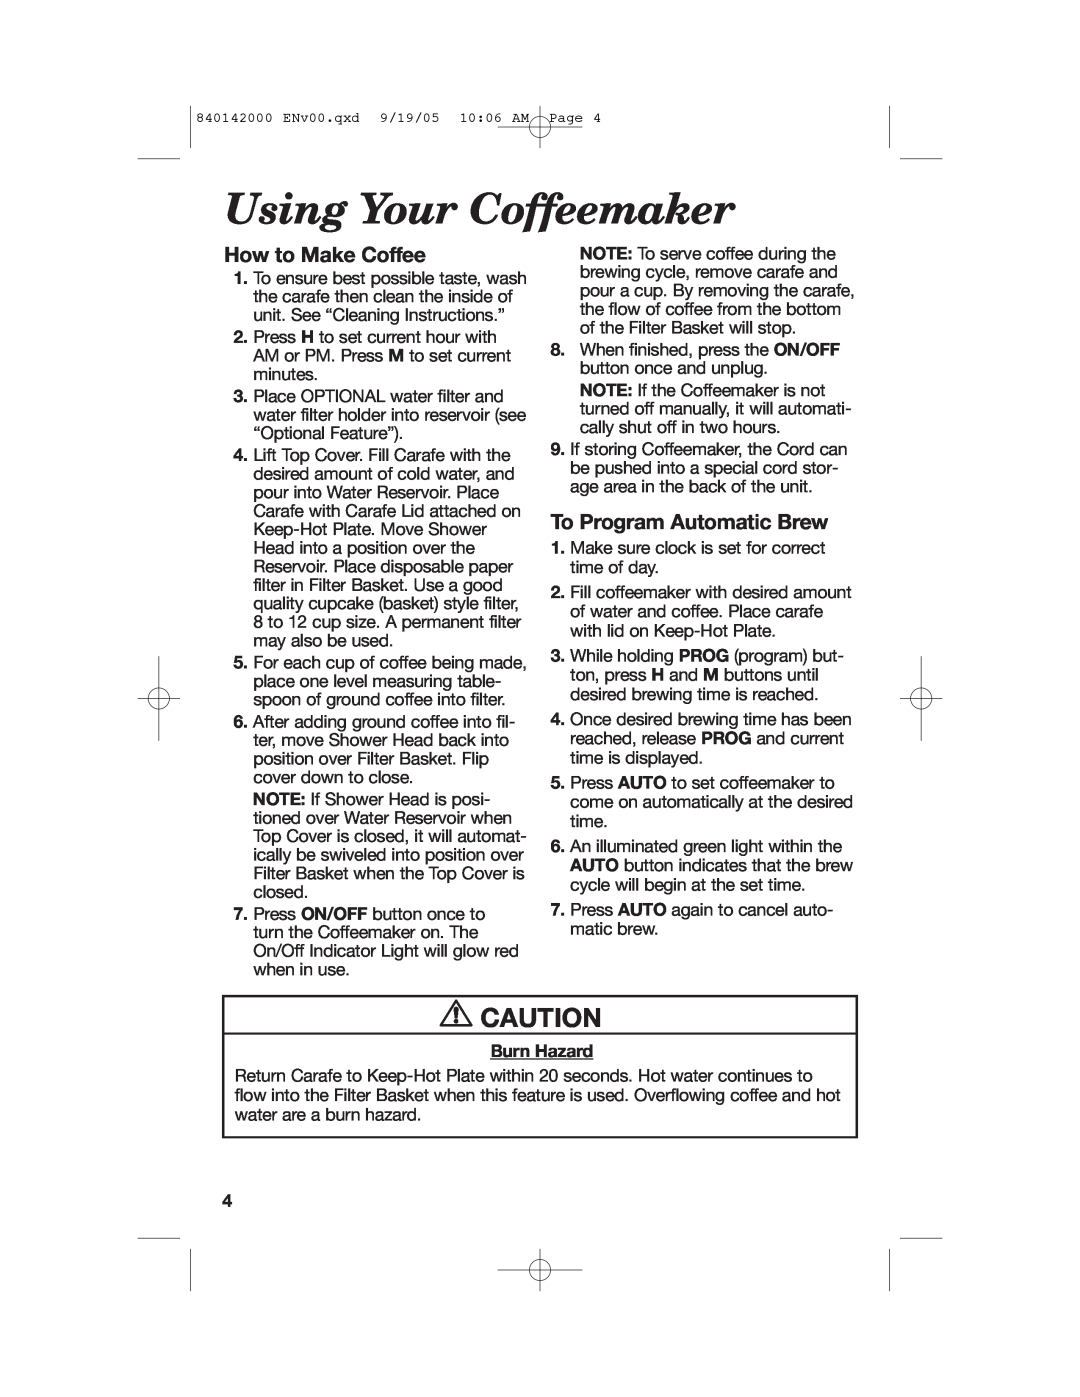 Hamilton Beach 840142000 manual Using Your Coffeemaker, How to Make Coffee, To Program Automatic Brew, Burn Hazard 